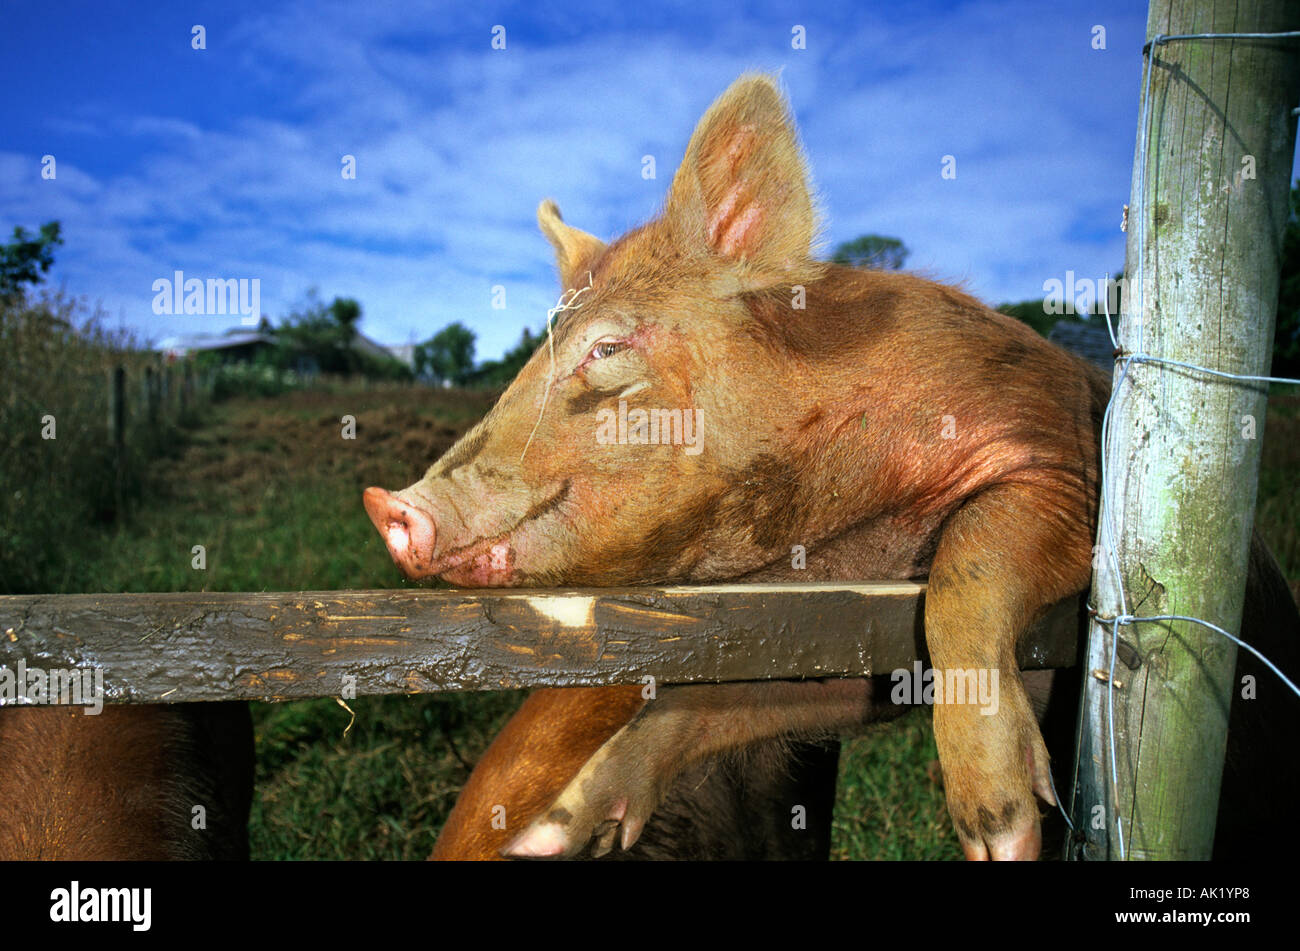 tamworth piglet climbing on a fence cornwall Stock Photo